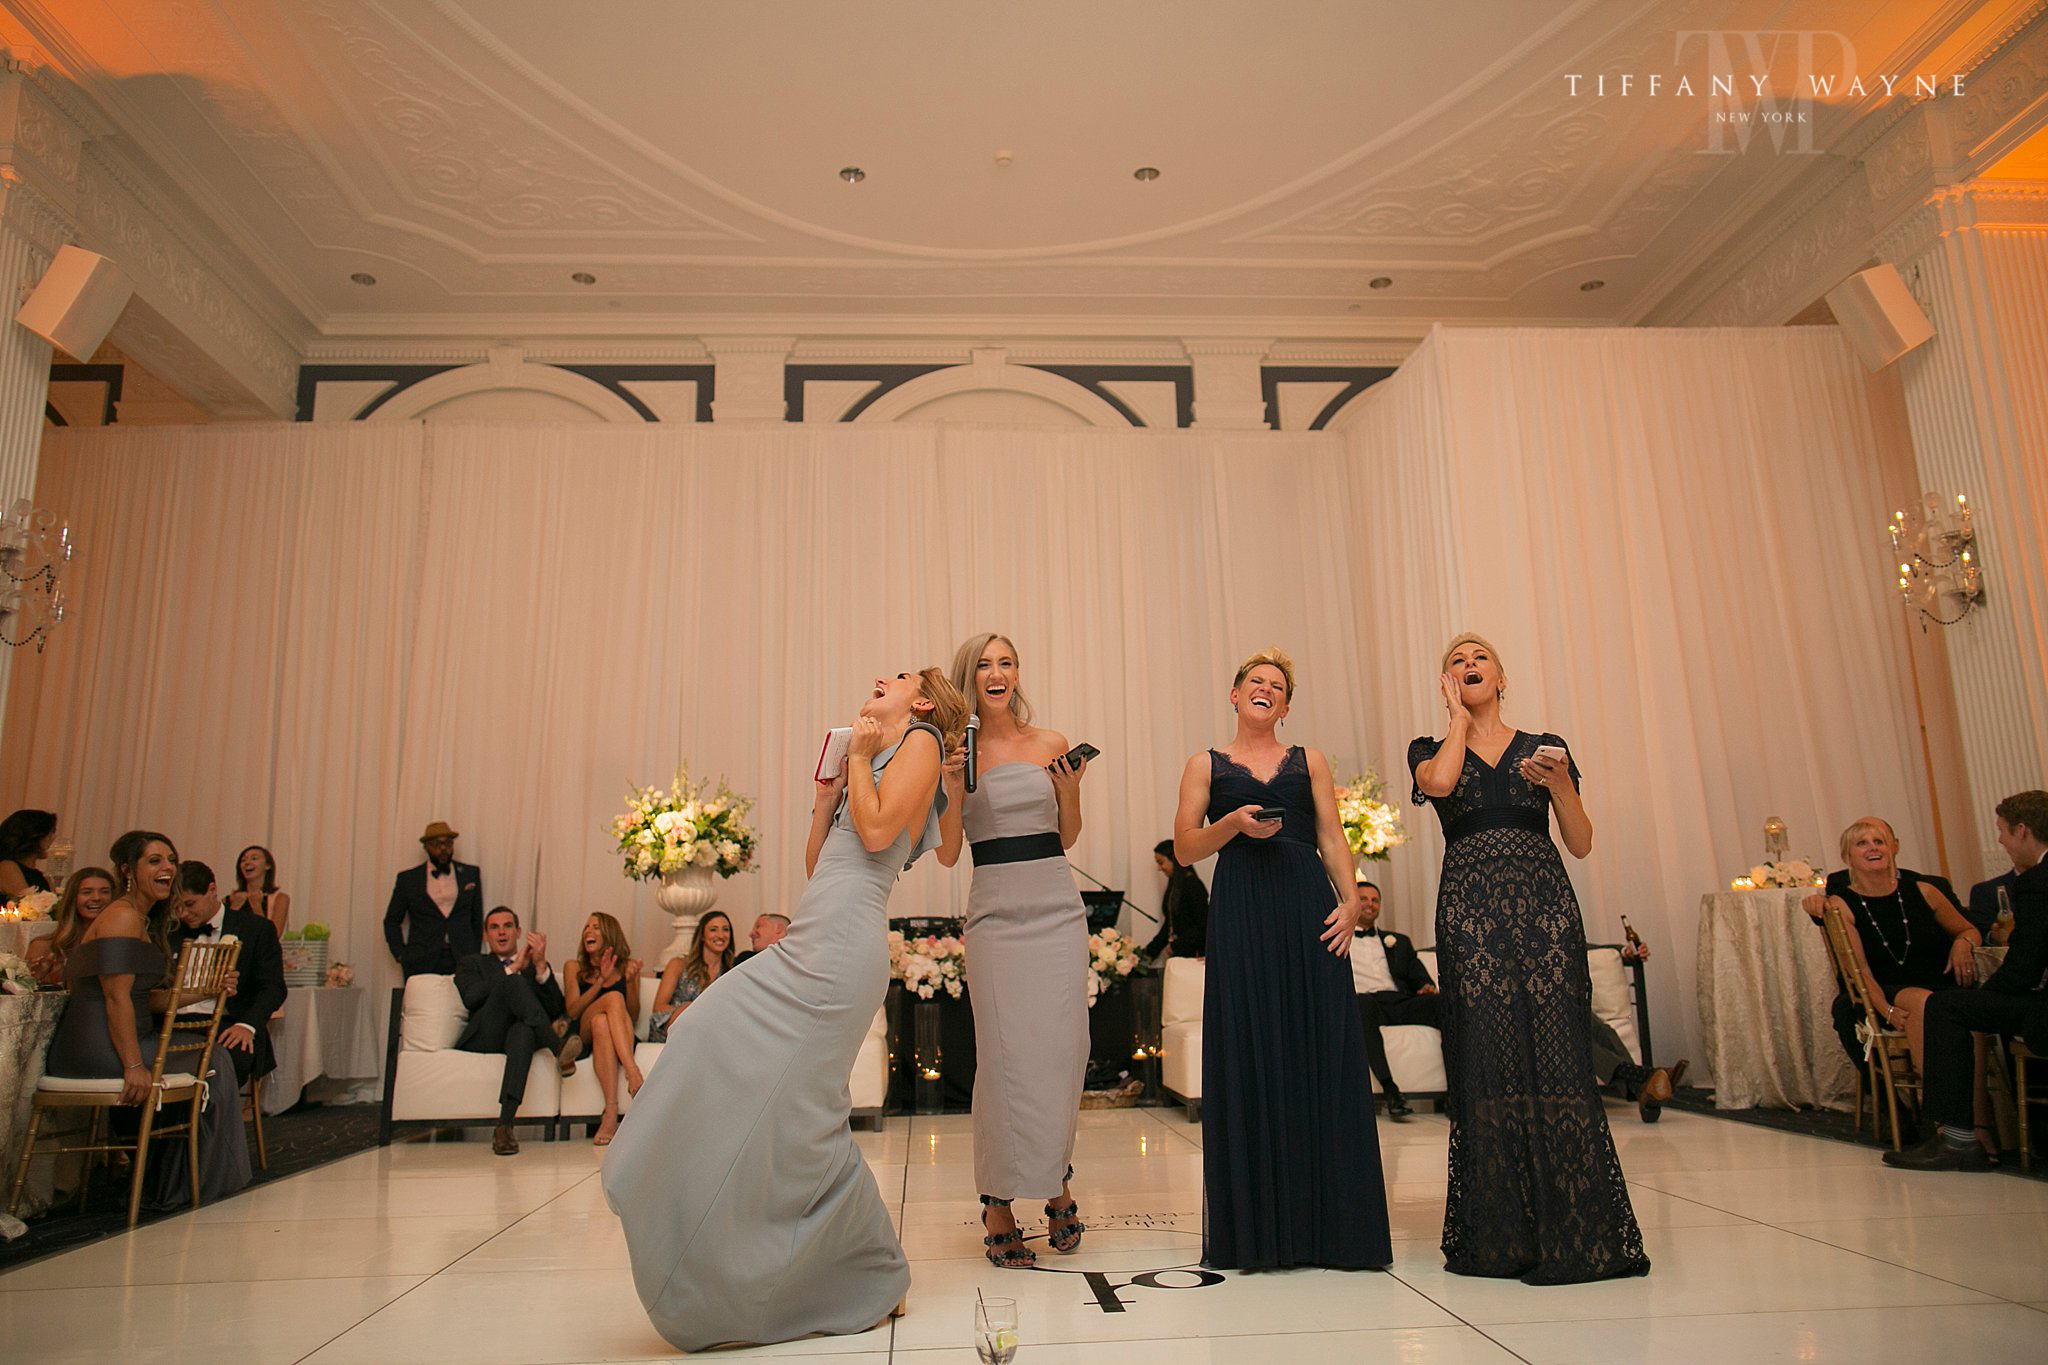 wedding toasts at Renaissance Hotel photographed by Tiffany Wayne Photography